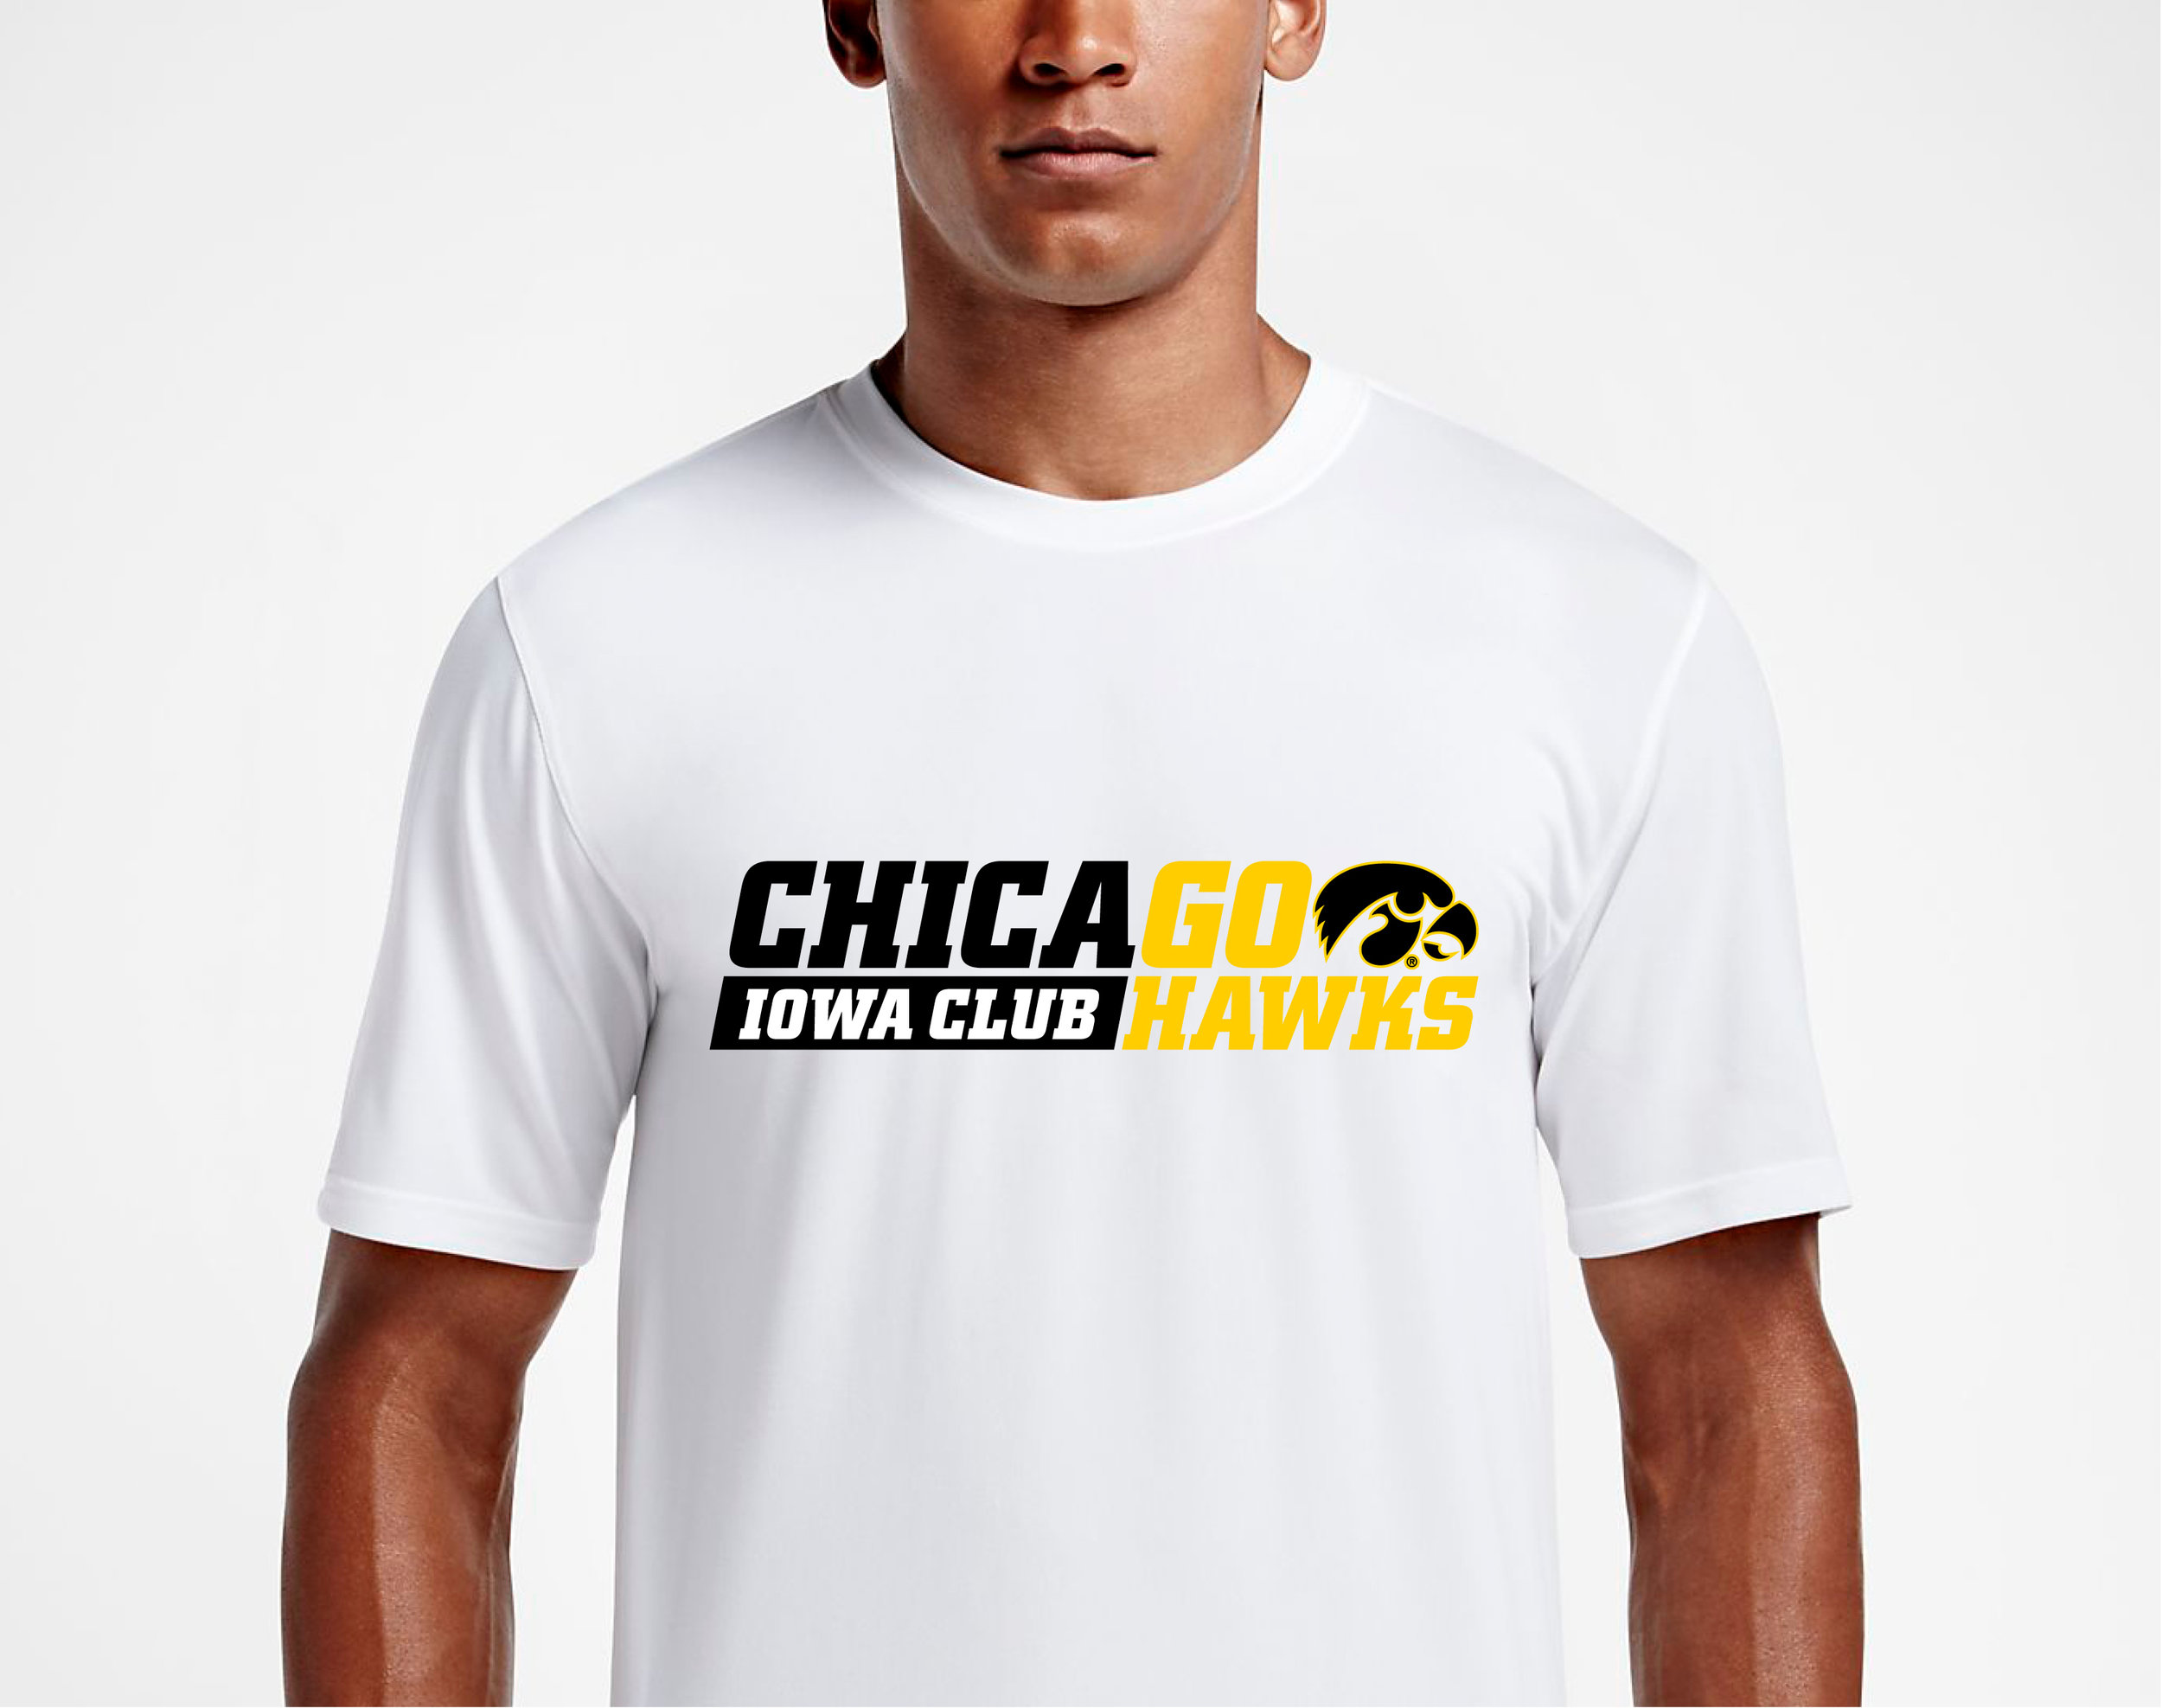  chicago iowa club t-shirt 